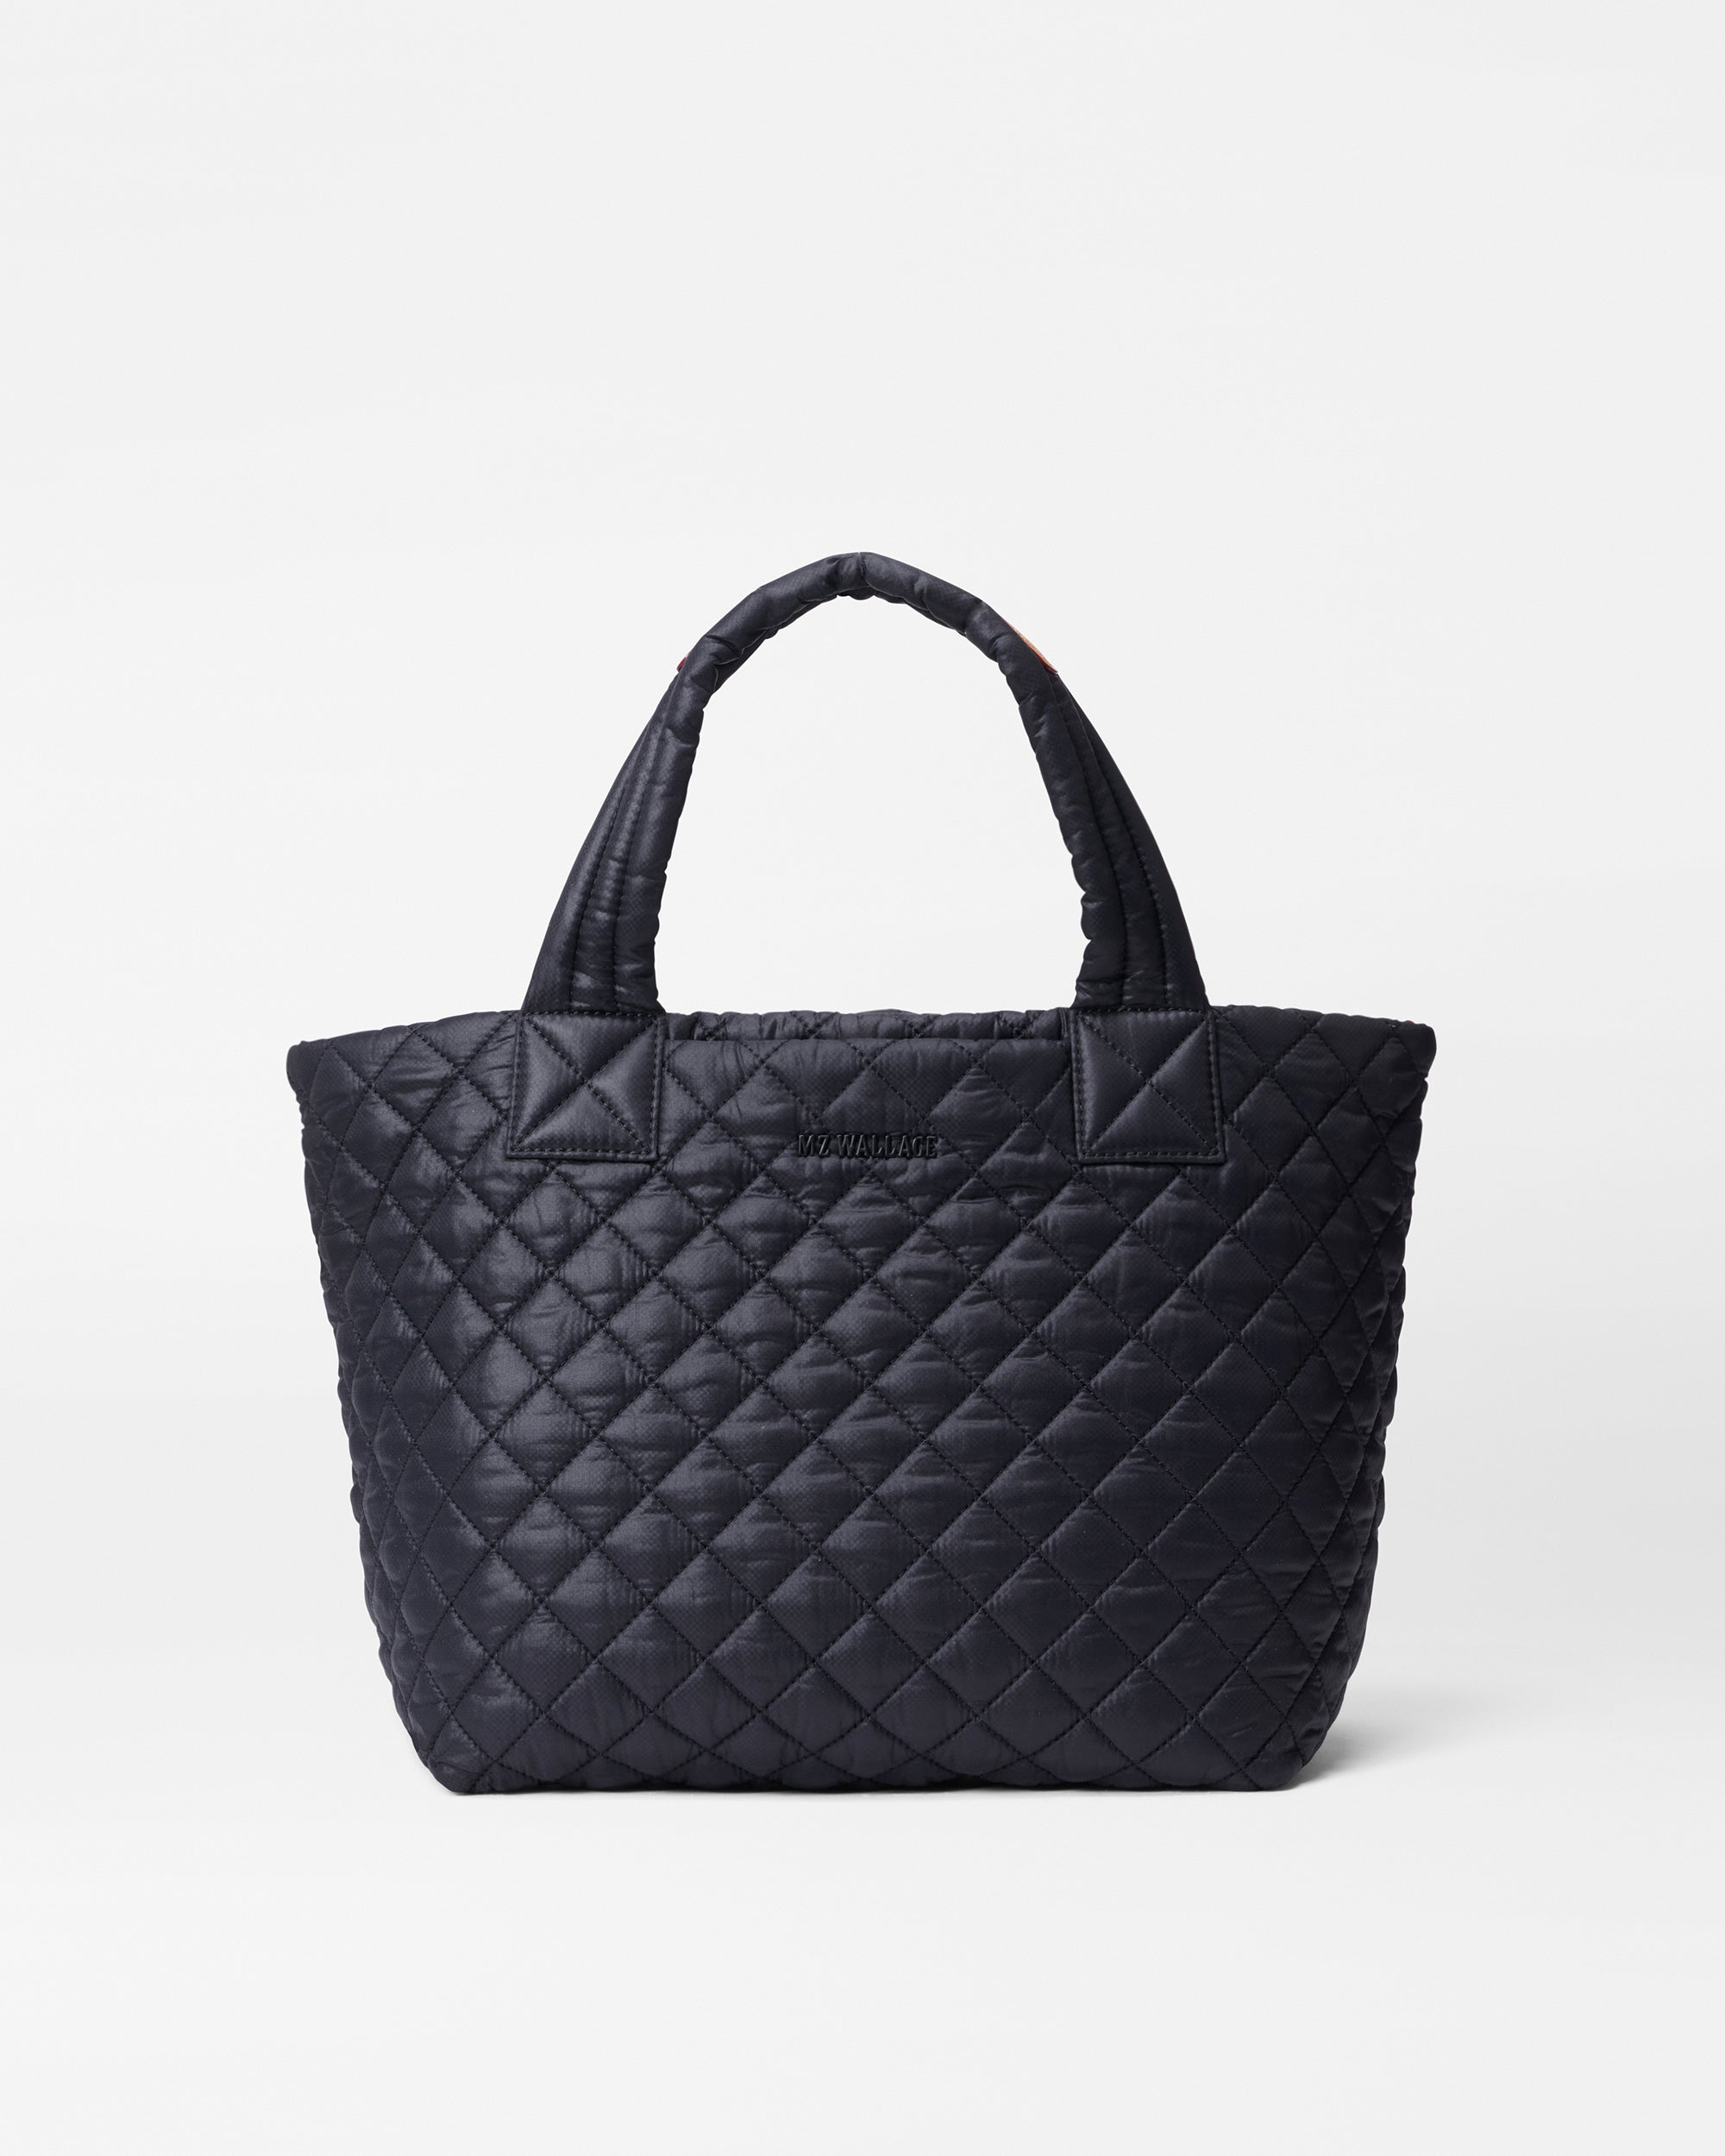 Buy ANGLOPANGLO Faux Leather Girls' Women's Medium Handbag |Shoulder Bag|  Ladies Purse (Black) at Amazon.in